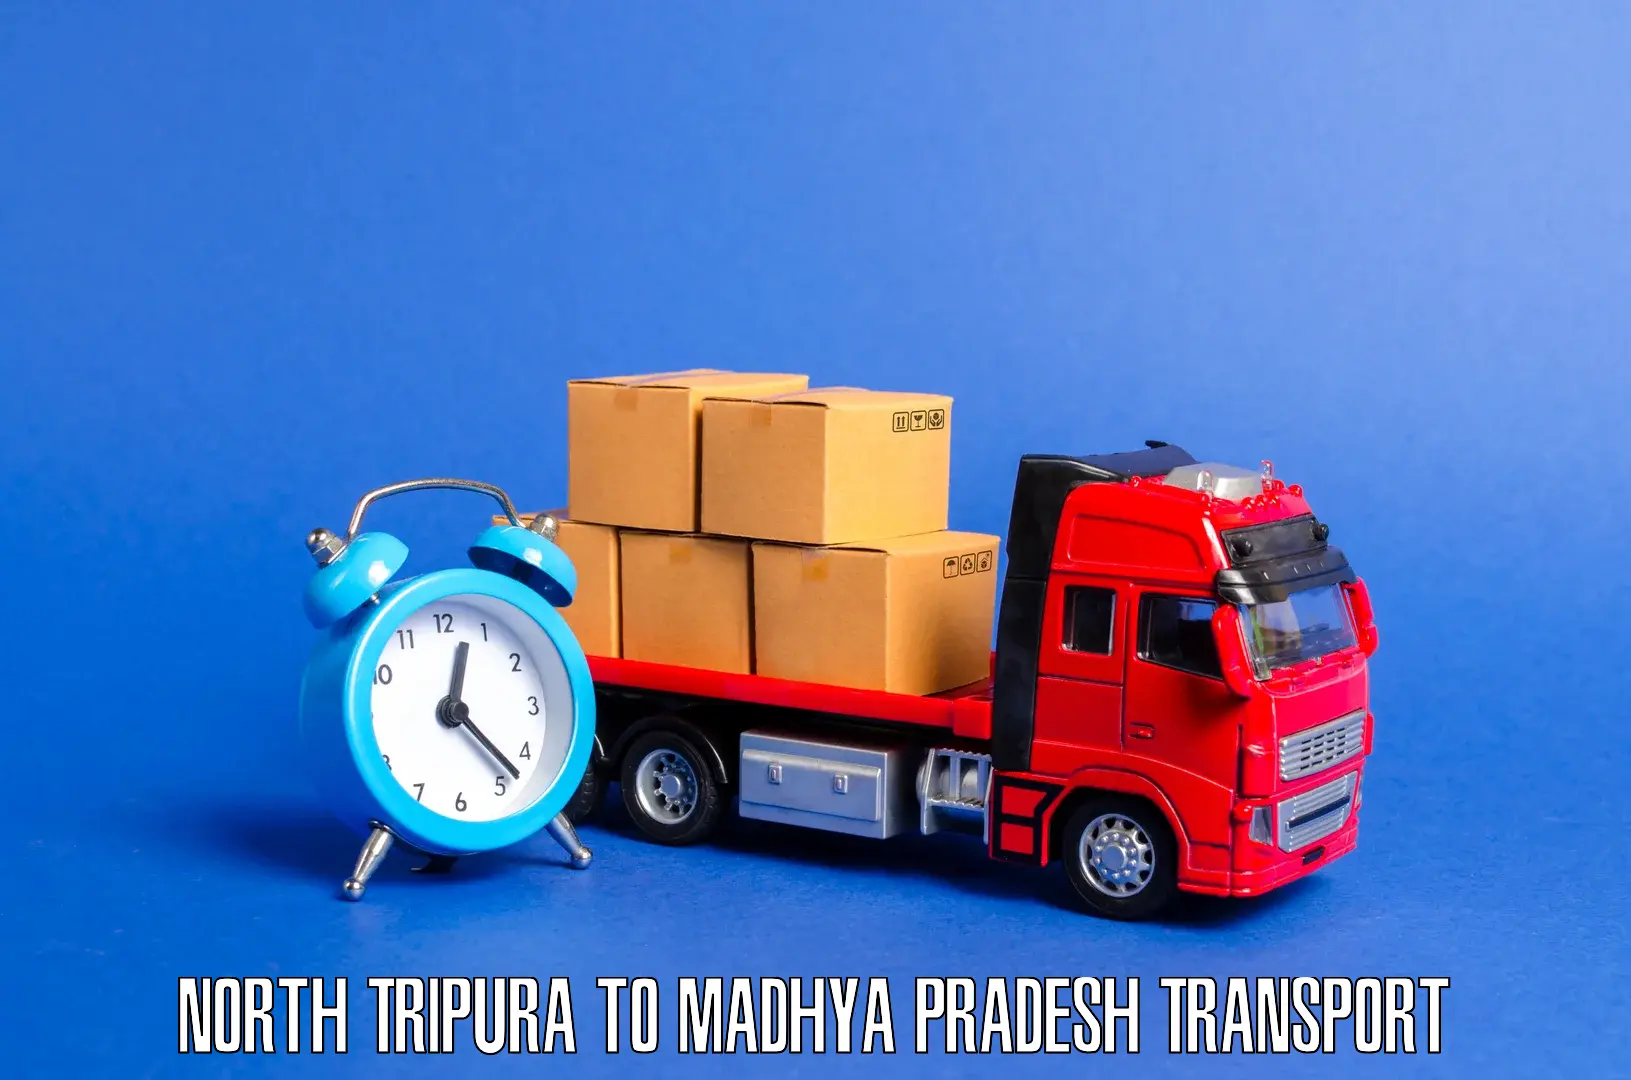 Delivery service North Tripura to Pachore